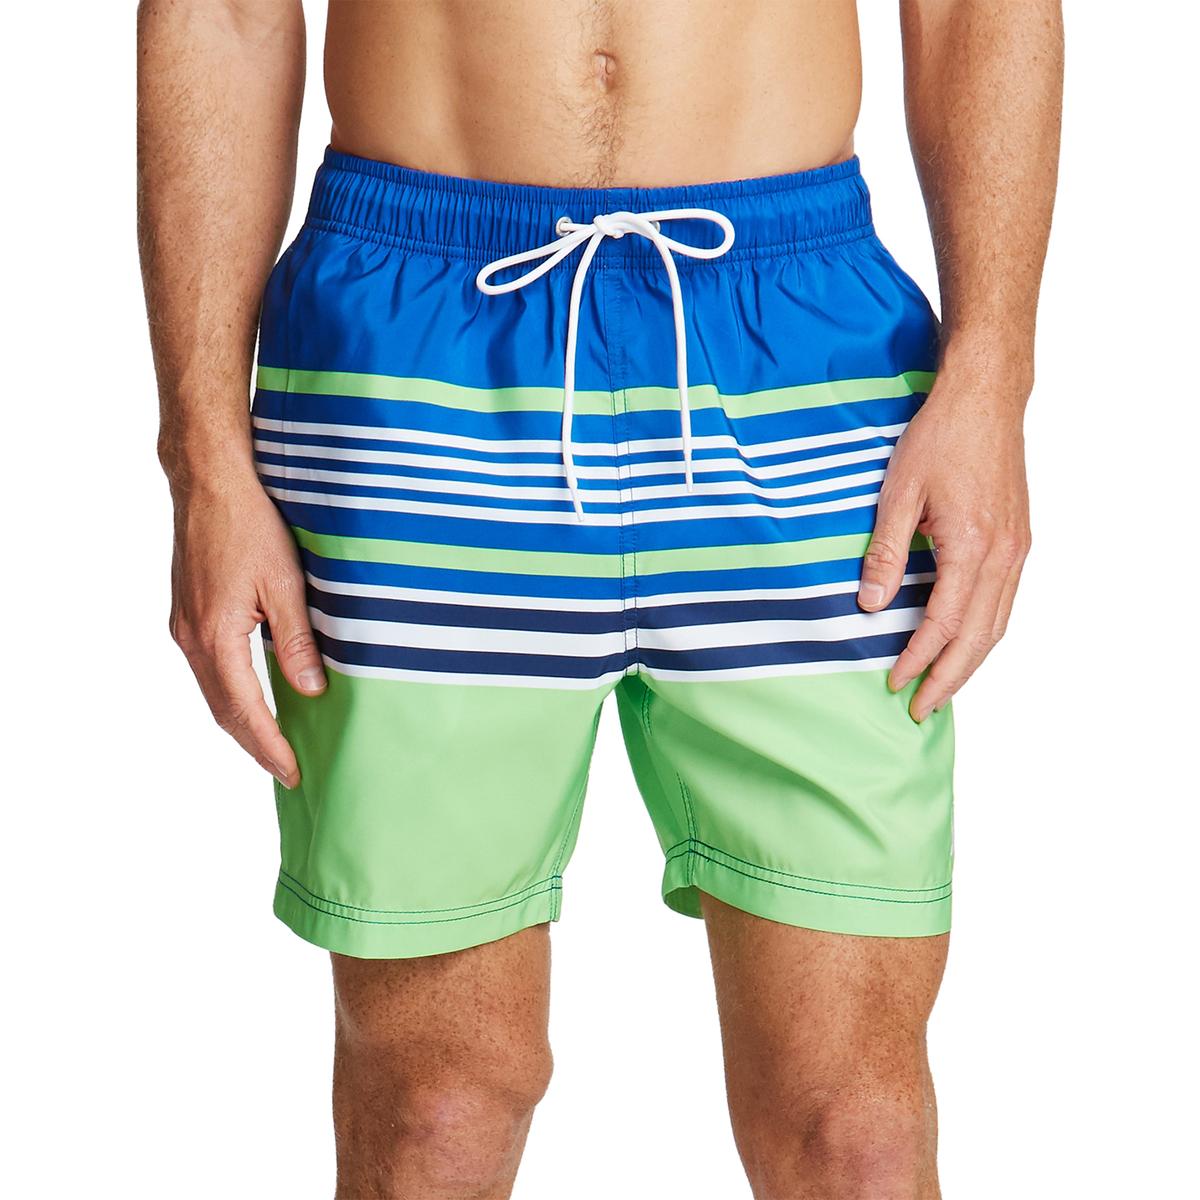 Nautica Mens Blue Striped Board Shorts Beachwear Swim Trunks XL BHFO ...